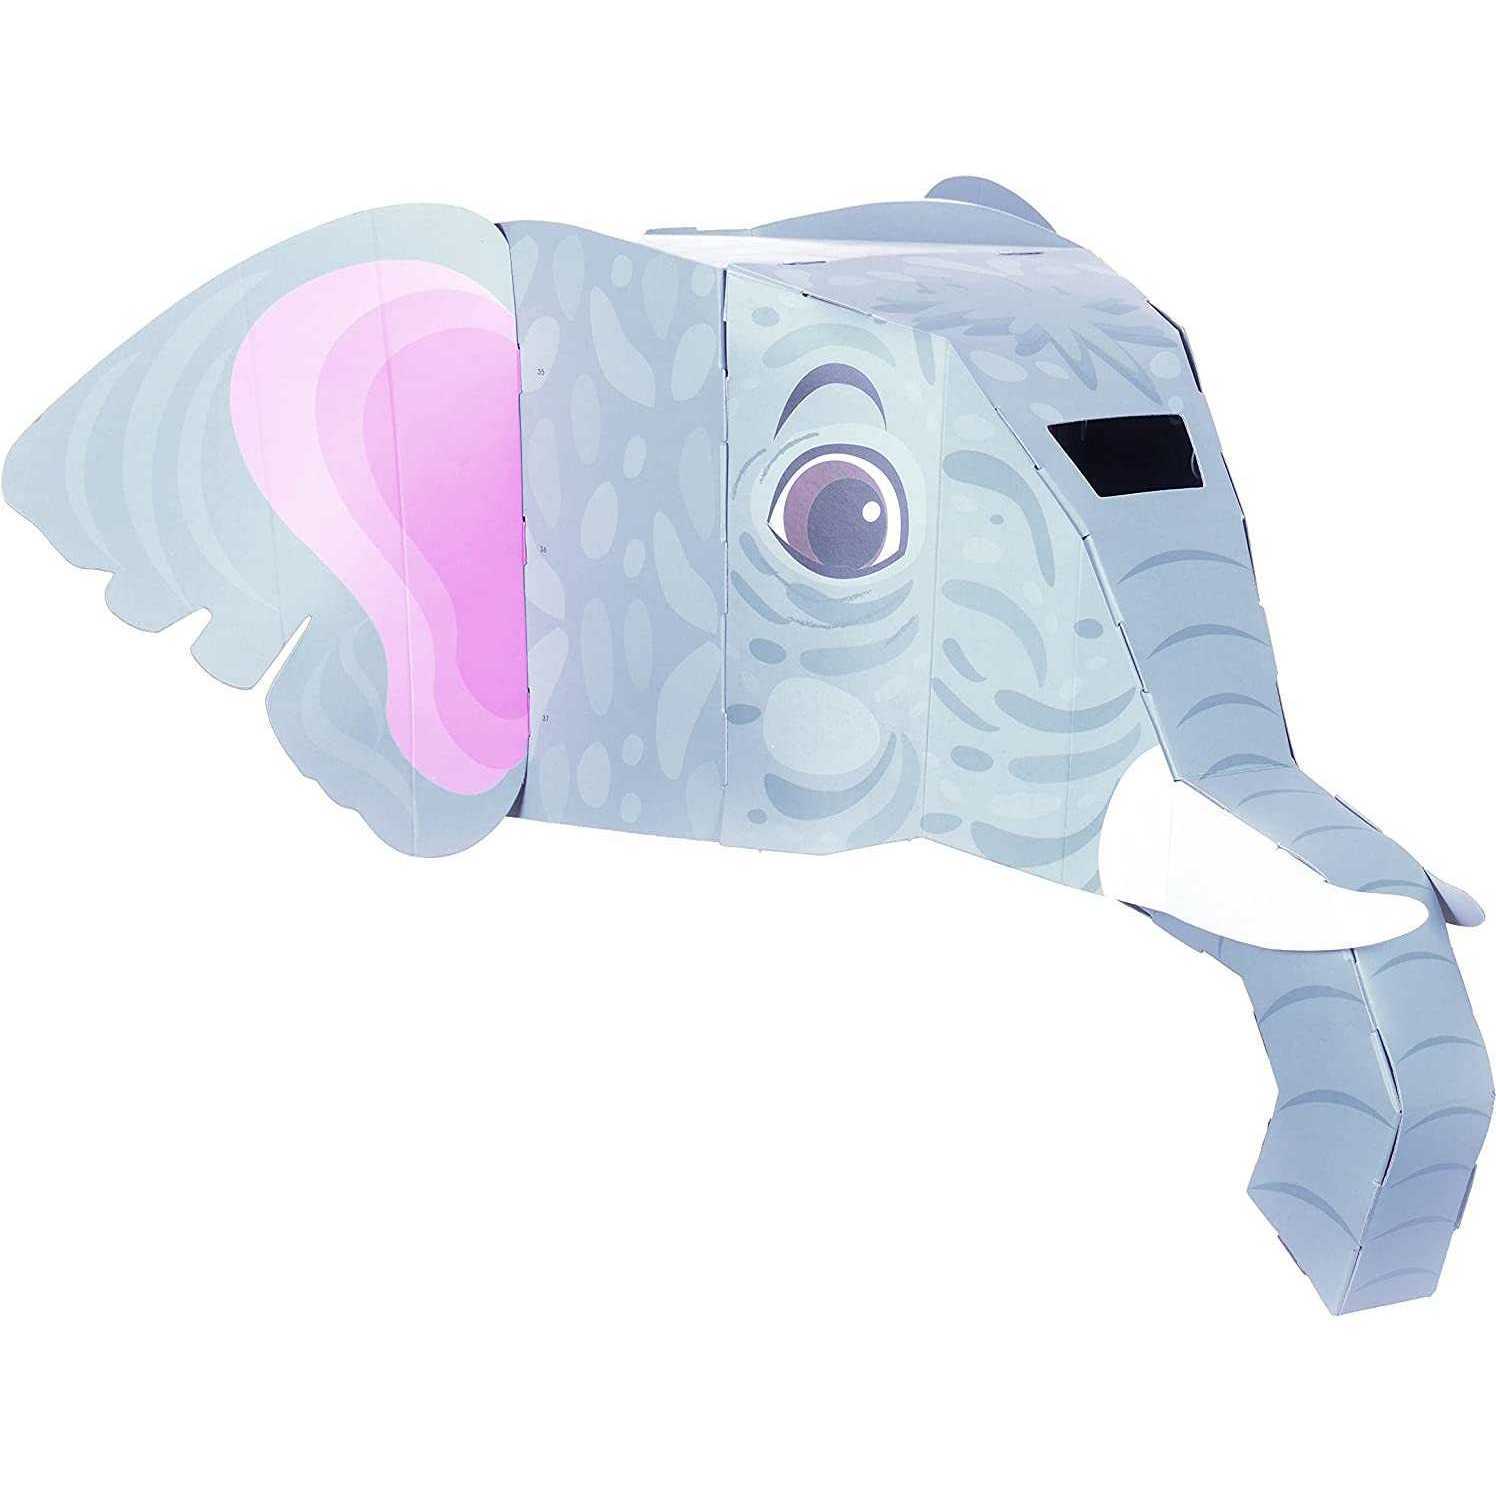 Masca 3D Elefant Fiesta Crafts FCT-3052